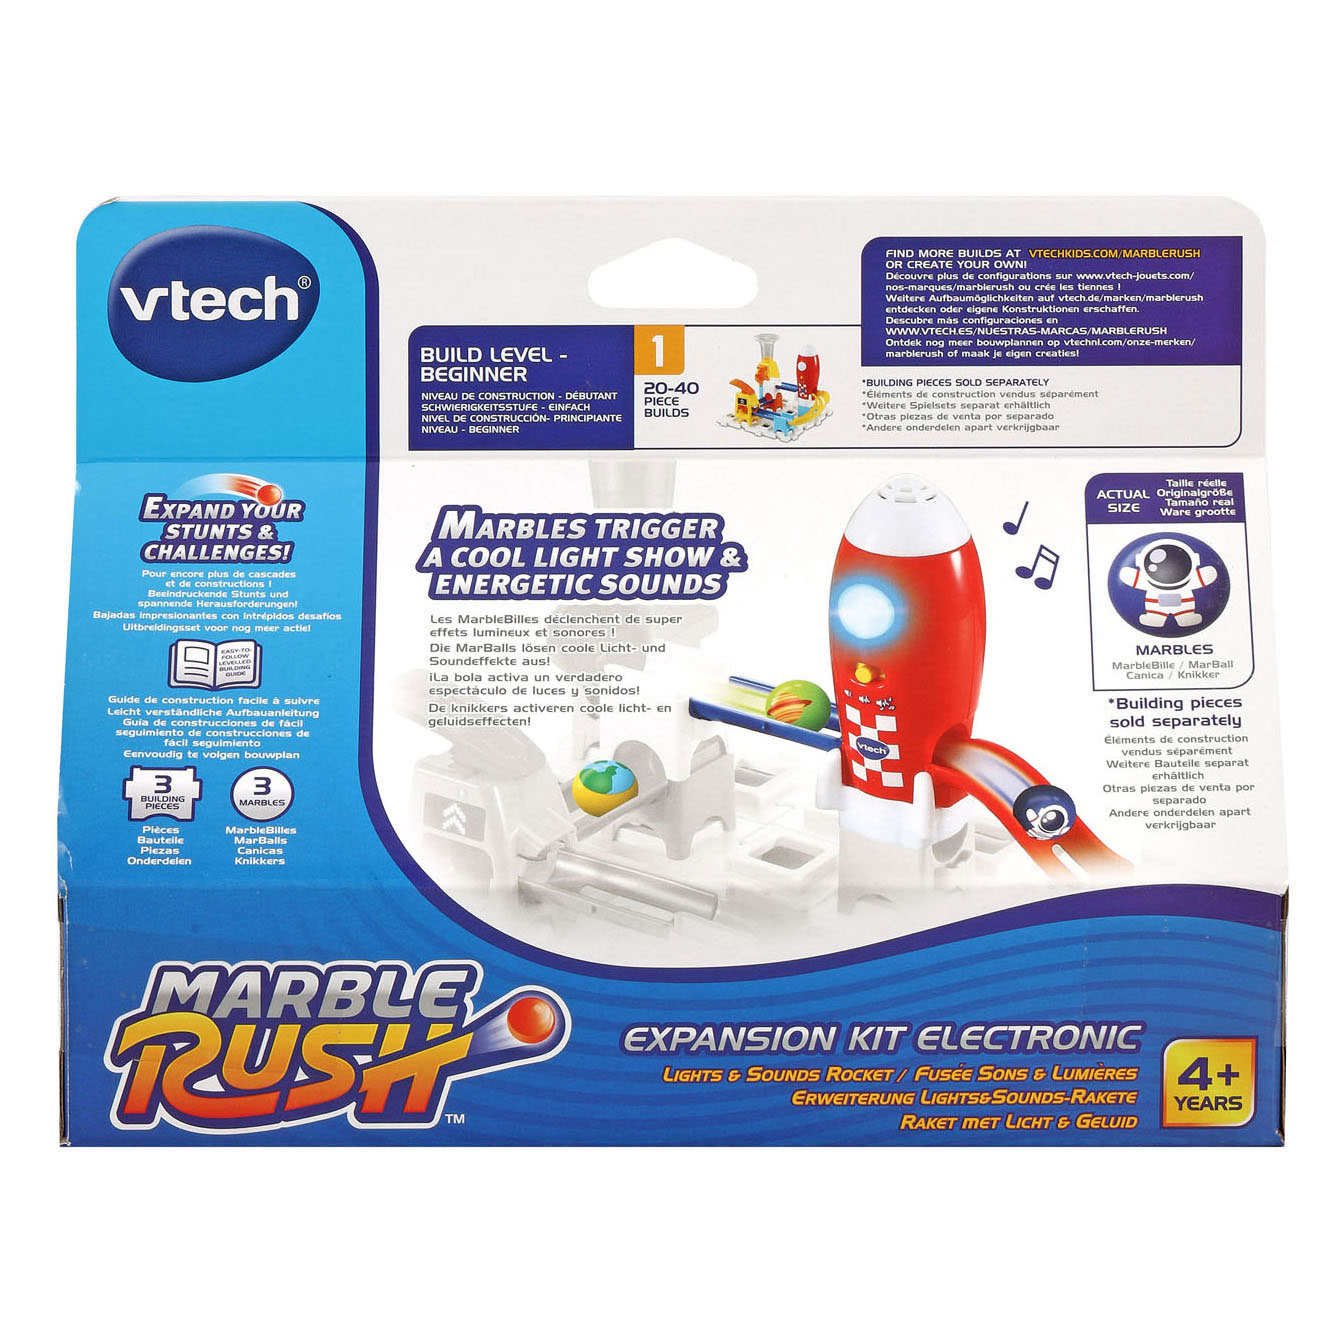 VTech Marble Rush - Expansion Kit Electronic - Rocket